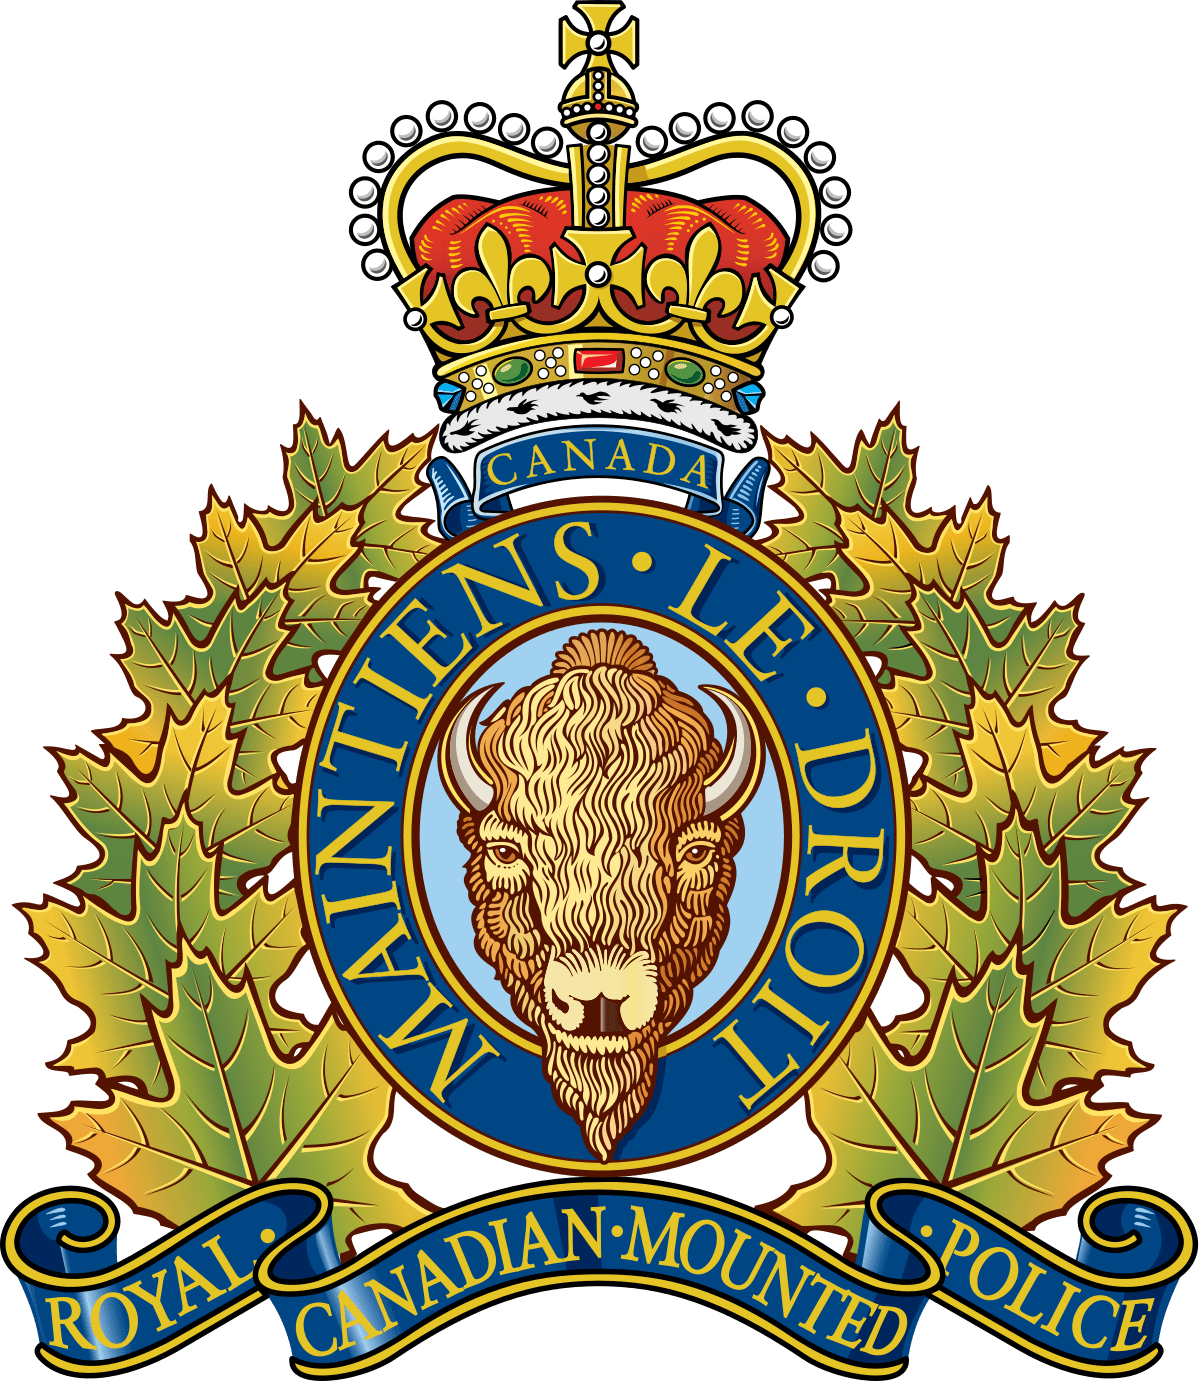 Calls for service over summer months decrease — RCMP